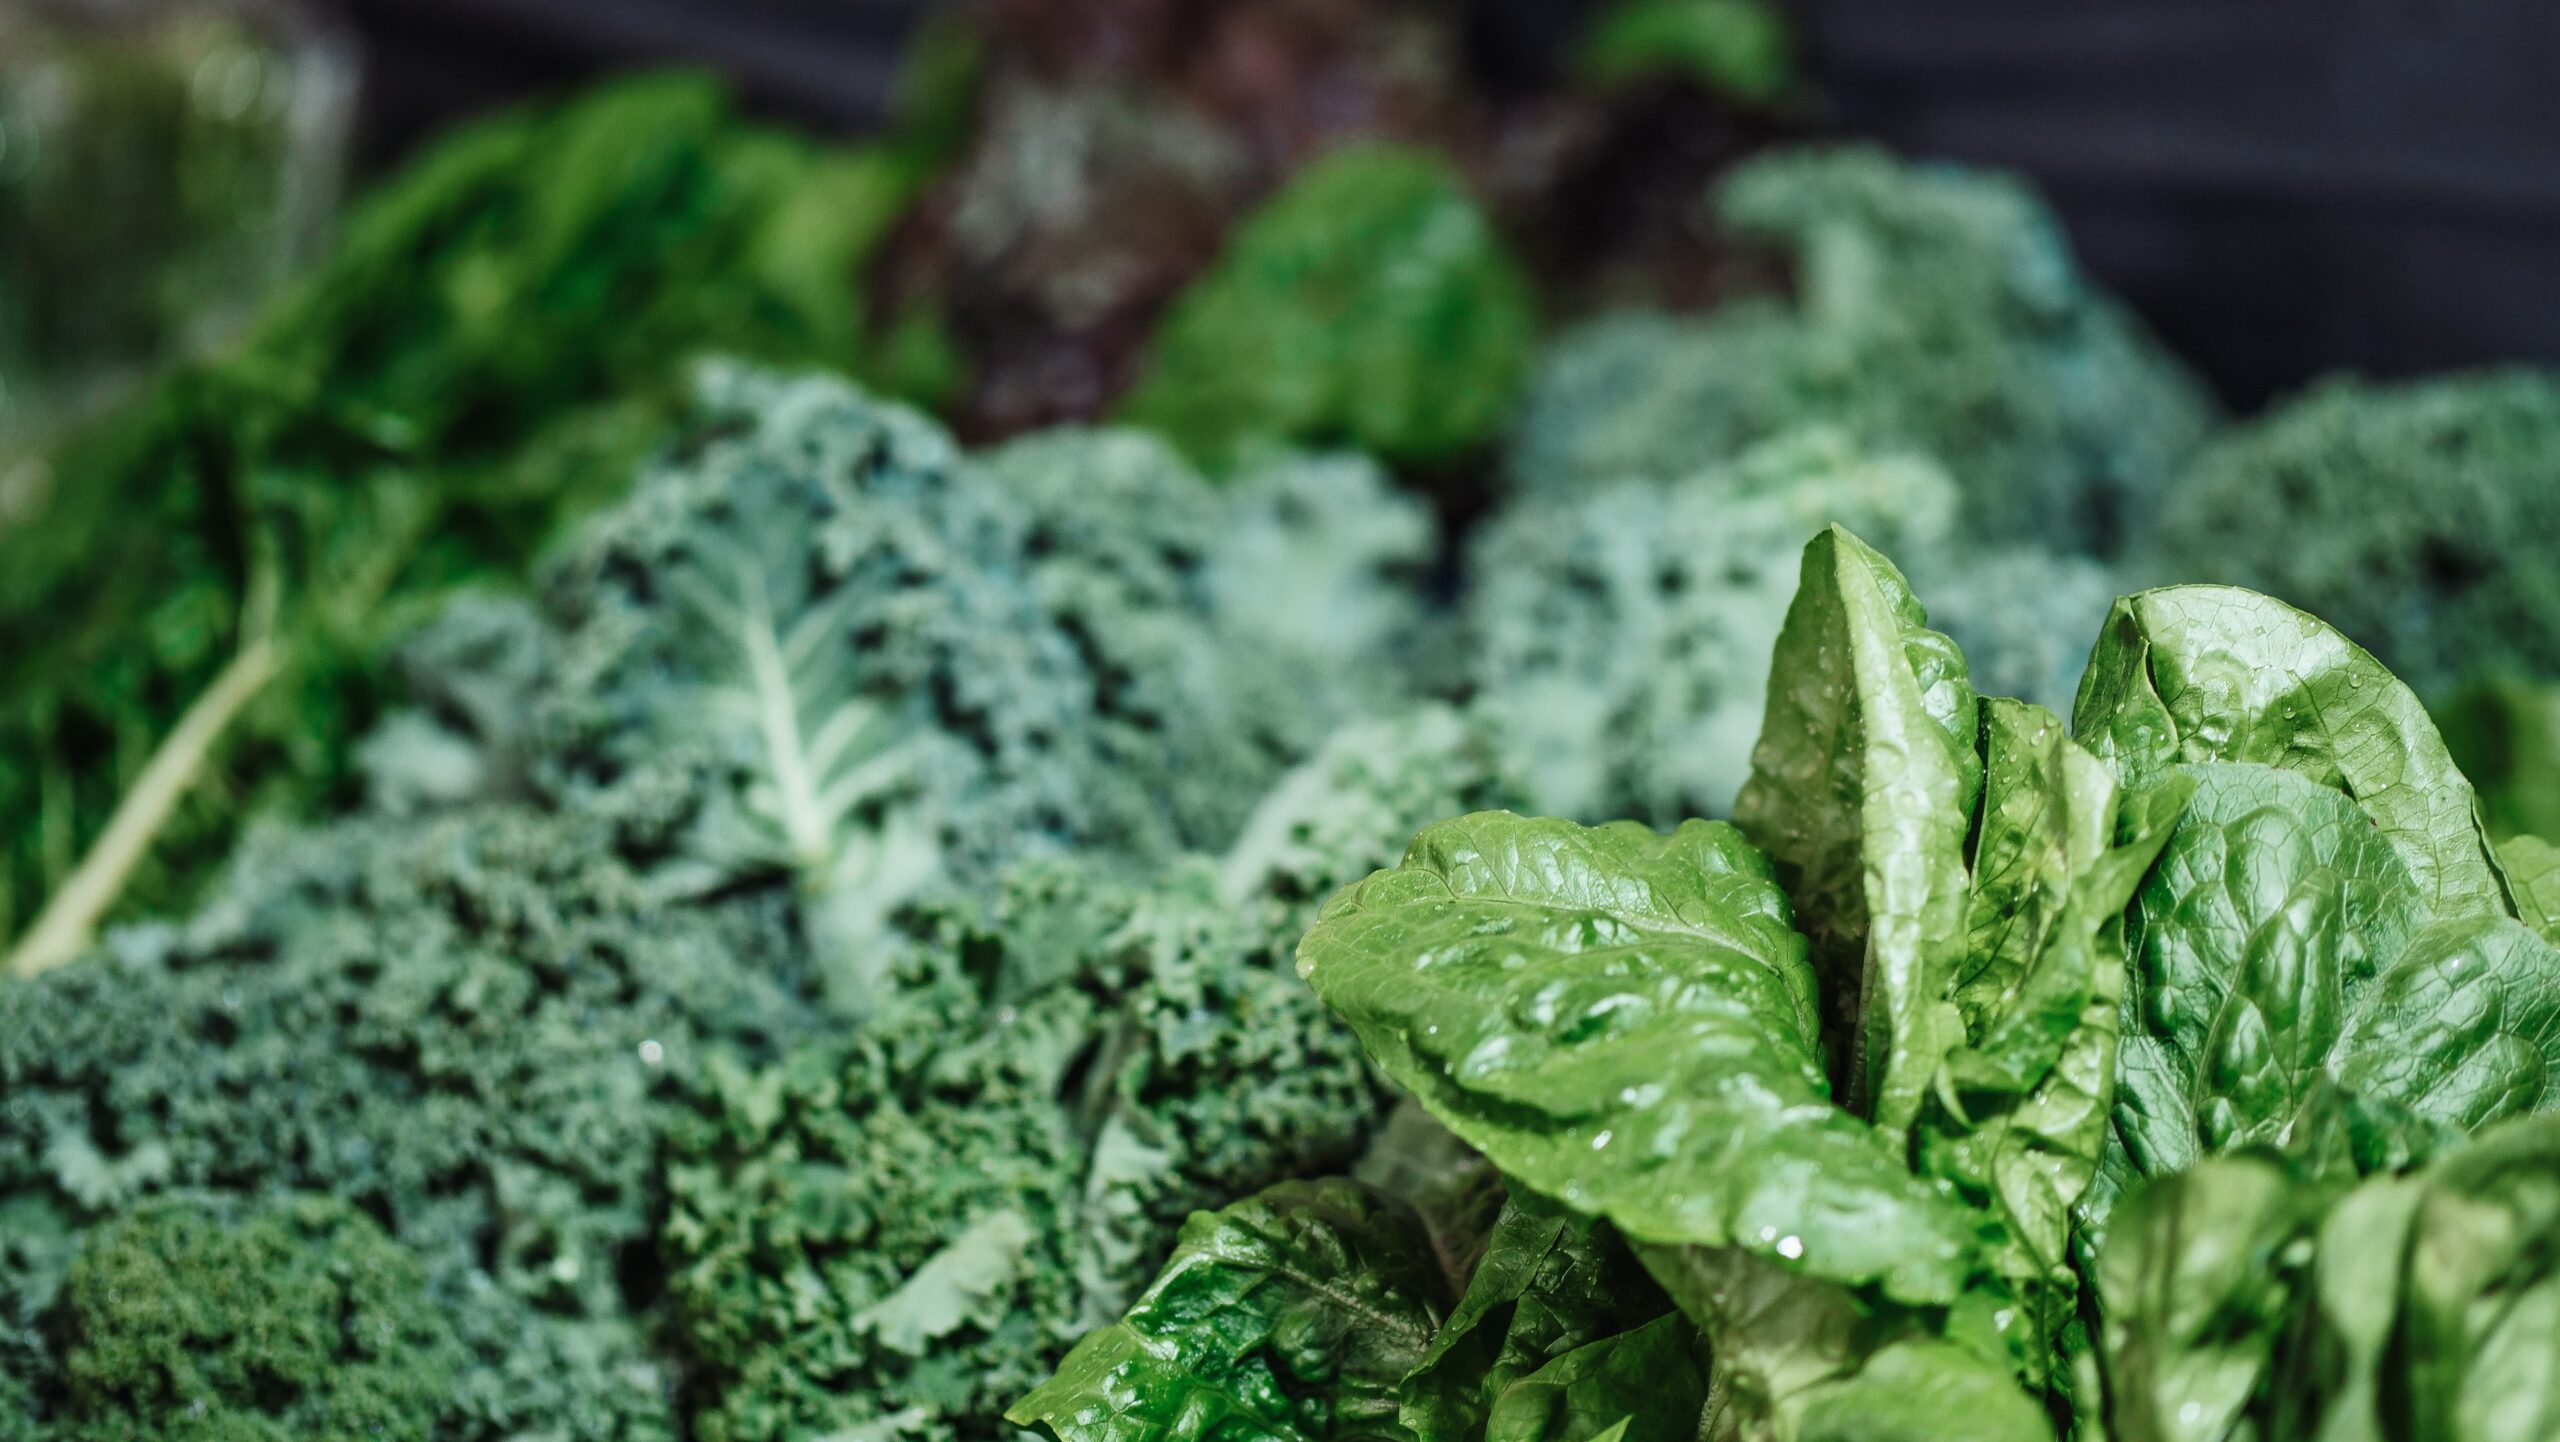 Kale Leafy Green Vegetables for Health